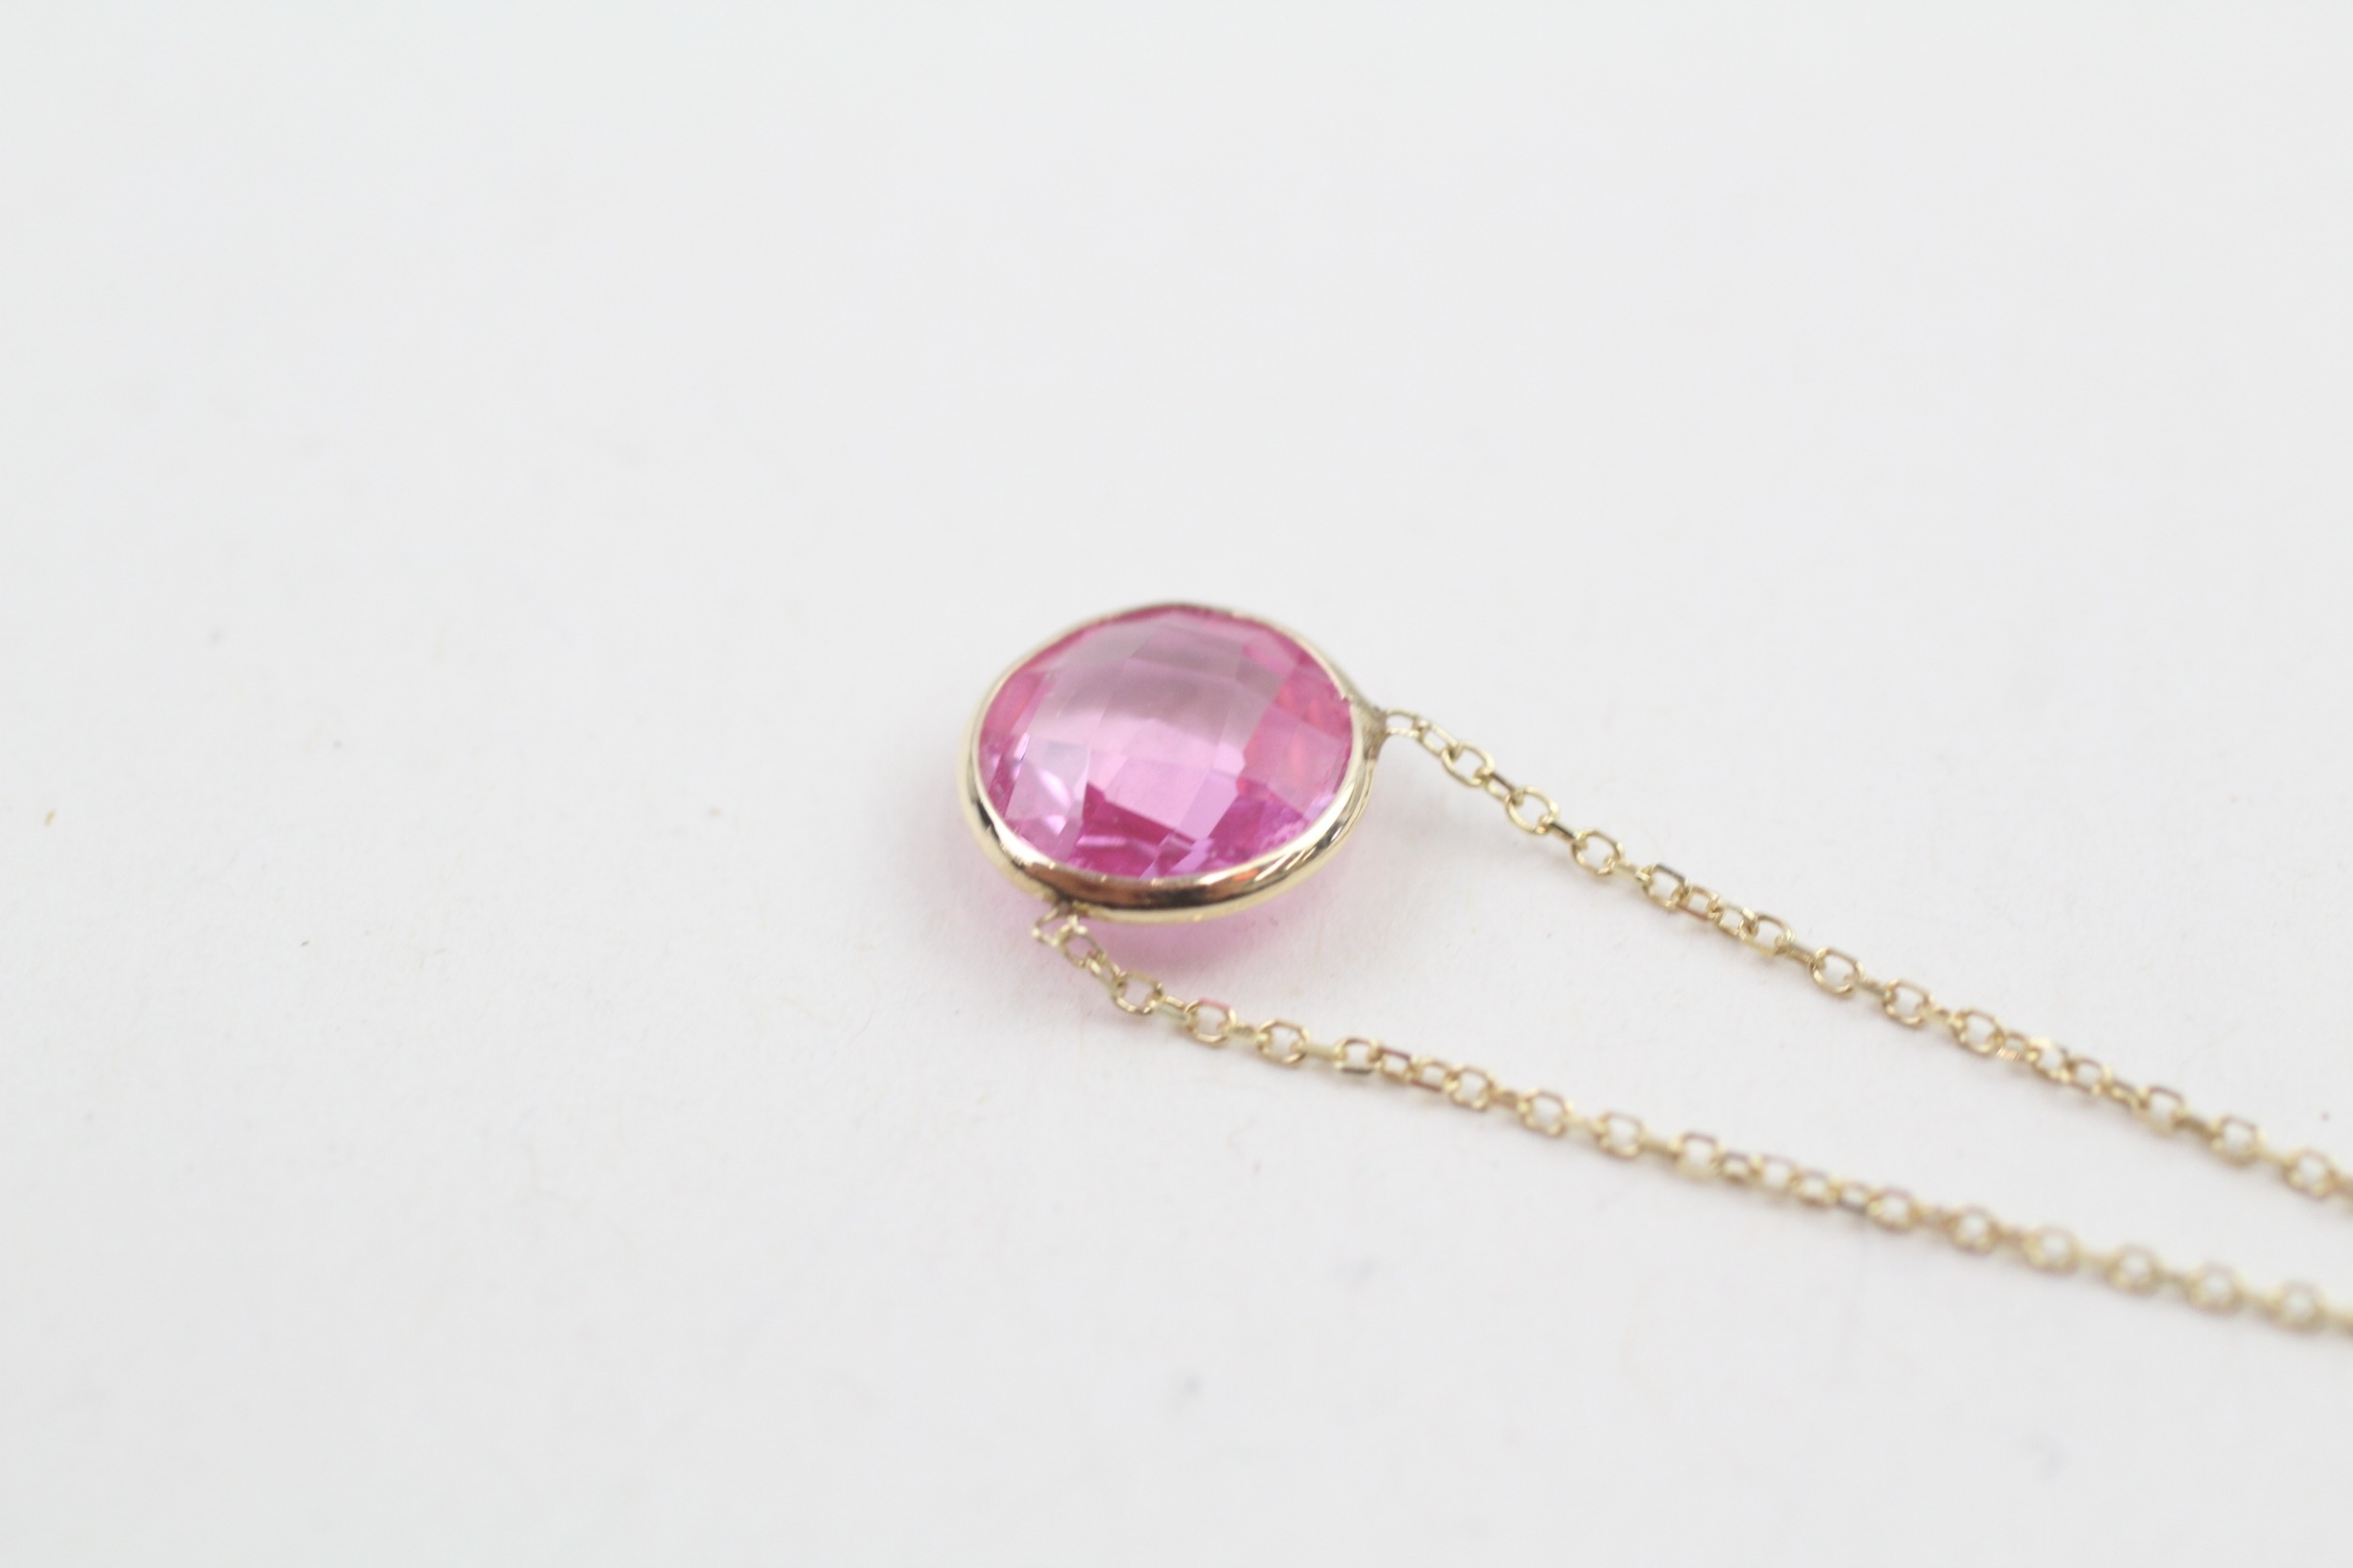 14ct gold faceted pink gemstonependant necklace, bezel set (1.3g) - Image 2 of 5